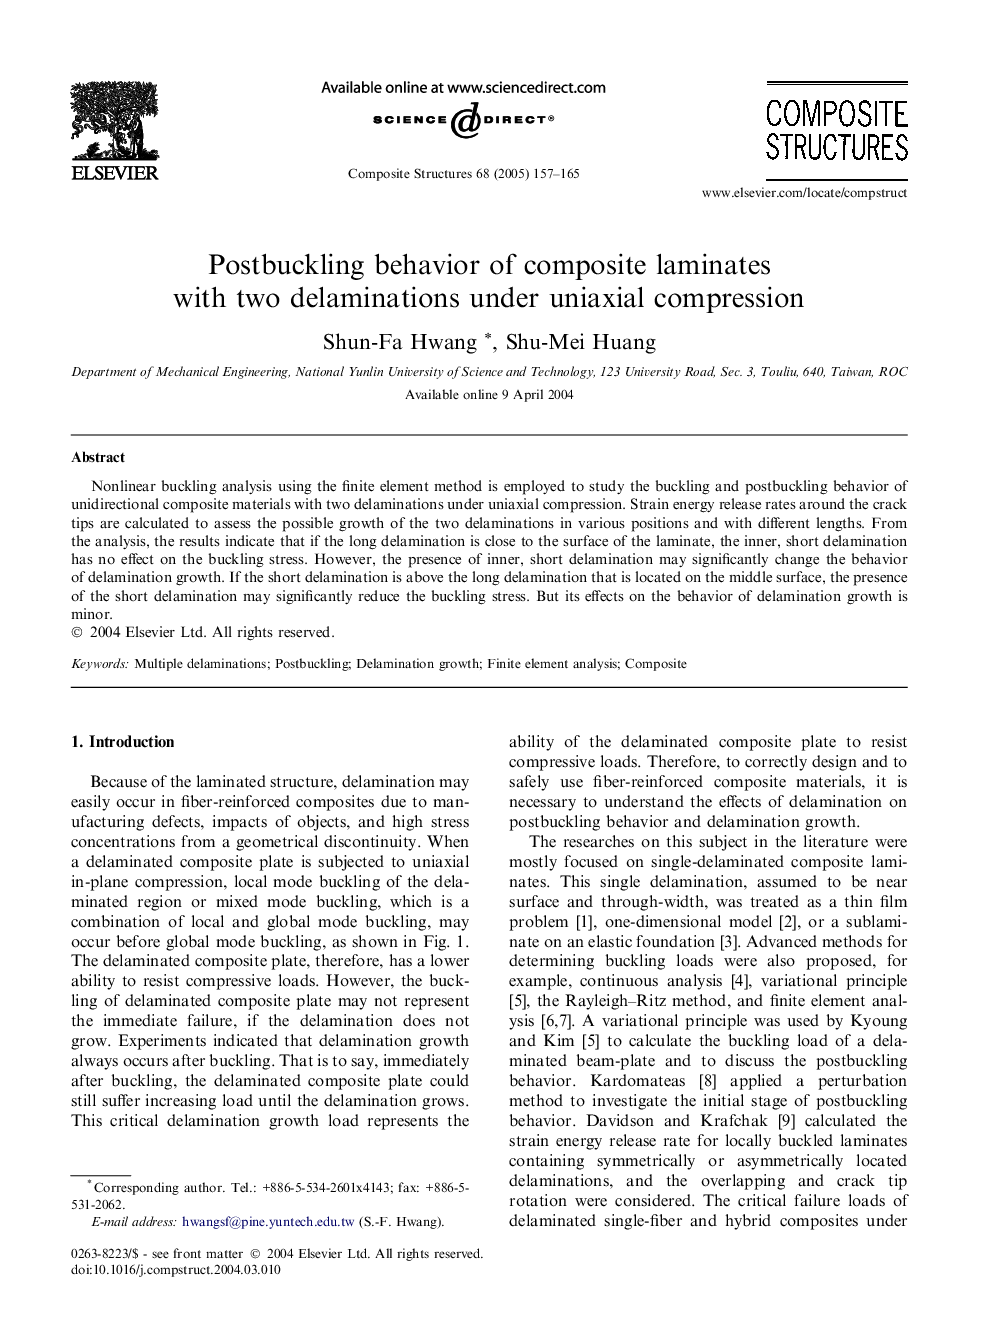 Postbuckling behavior of composite laminates with two delaminations under uniaxial compression